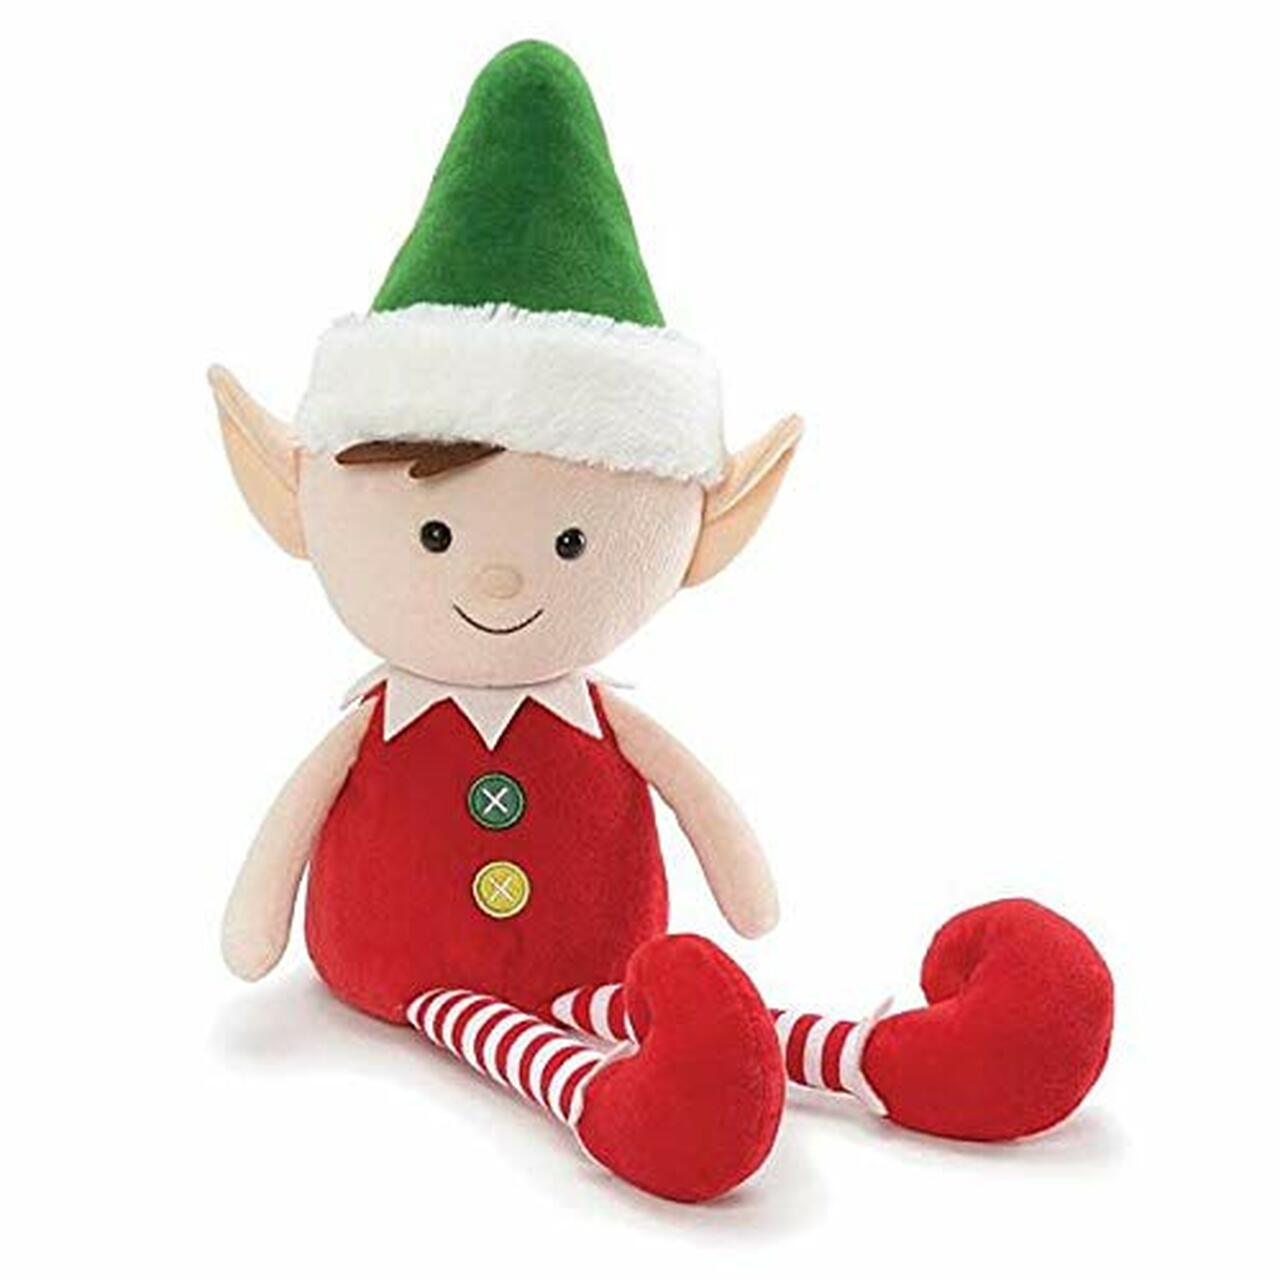 Christmas Elf Plush Buttons The Elf 18 inch GUND